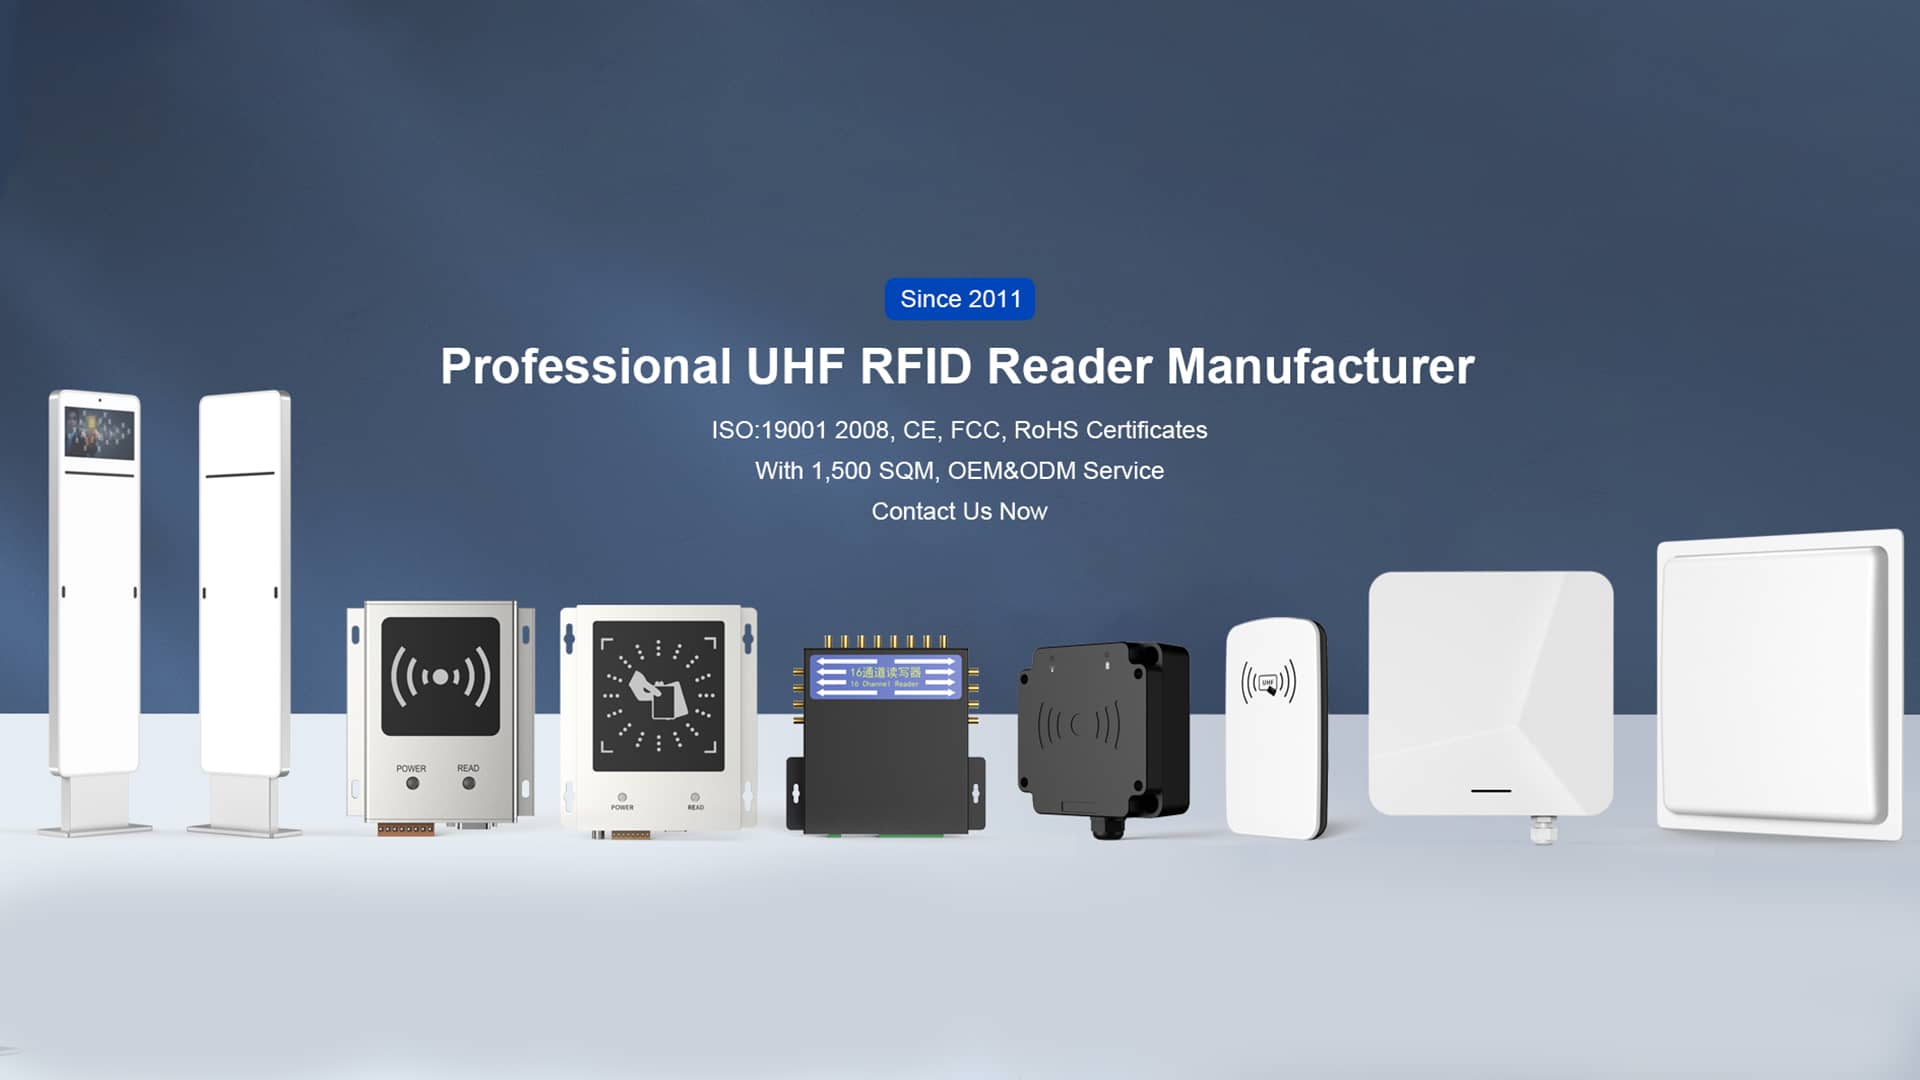 Revolutionizing Industrial Internet: The Power of LF RFID Technology